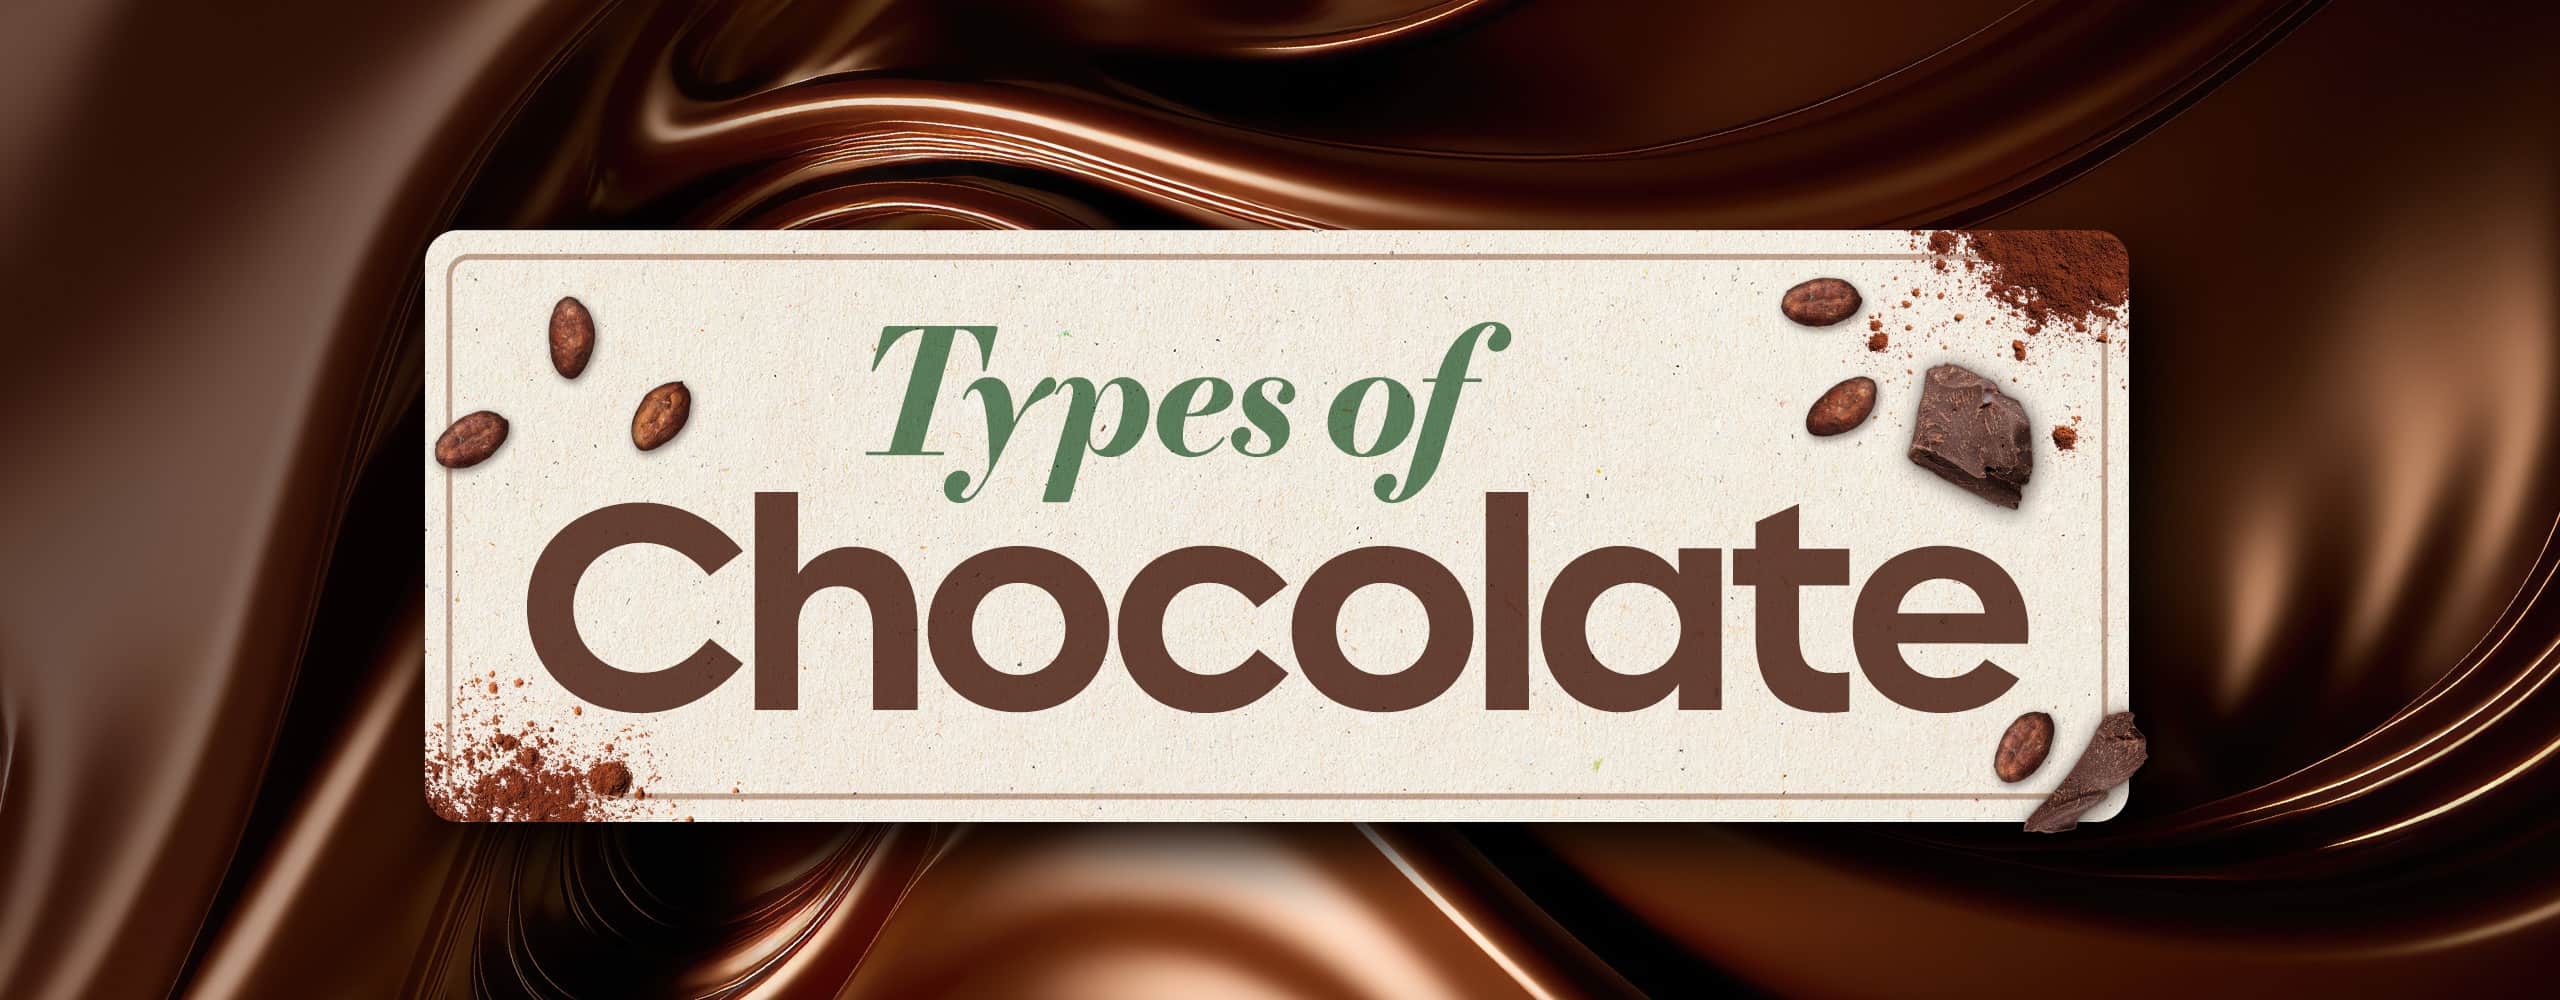 https://cdnimg.webstaurantstore.com/images/guides/953/types-of-chocolate-header.jpg